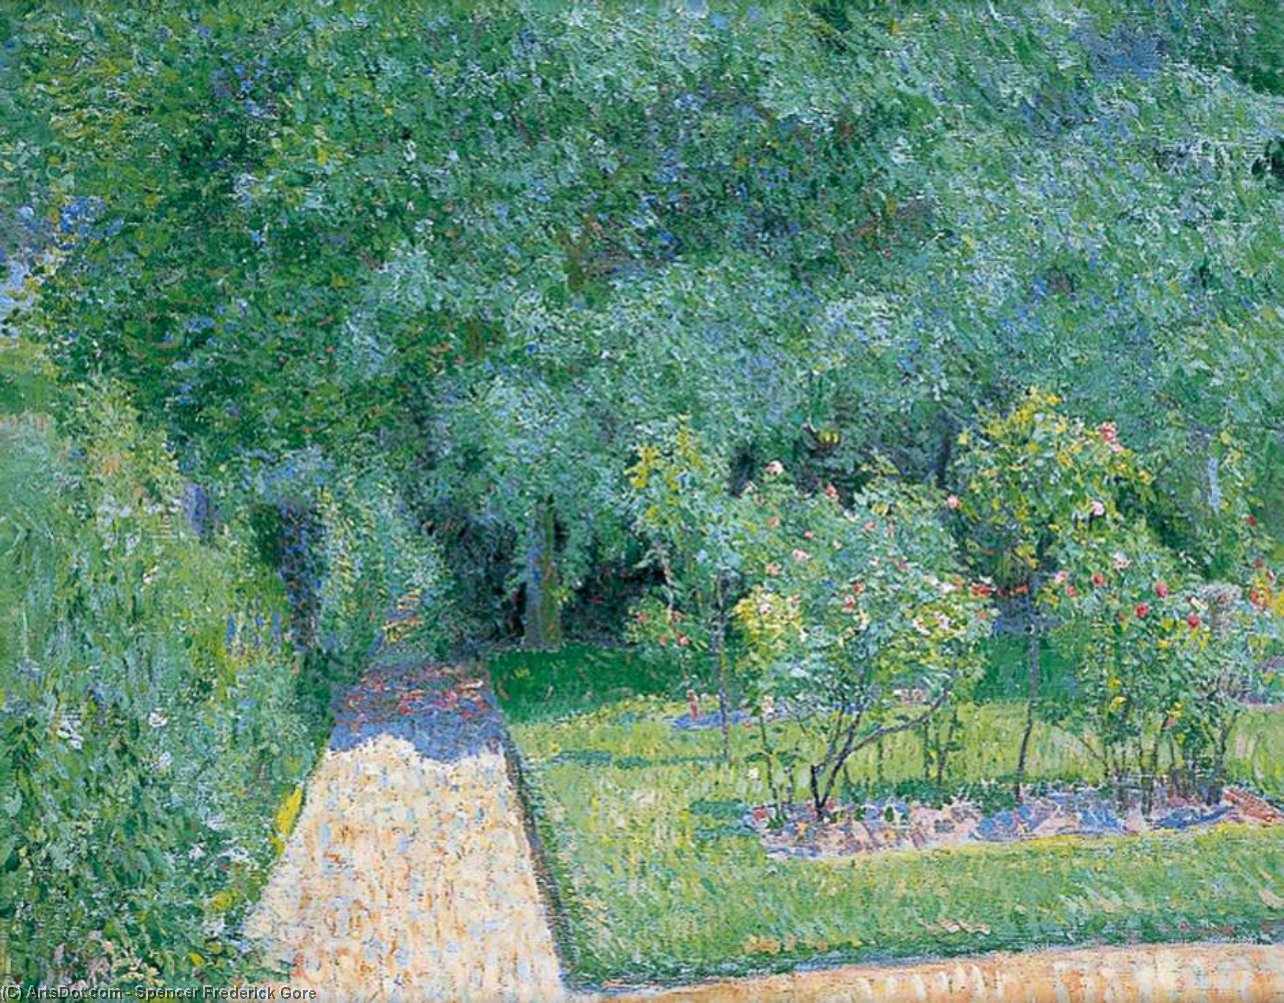 Buy Museum Art Reproductions The Garden Path, Garth House, 1910 by Spencer Frederick Gore (1878-1914, United Kingdom) | ArtsDot.com